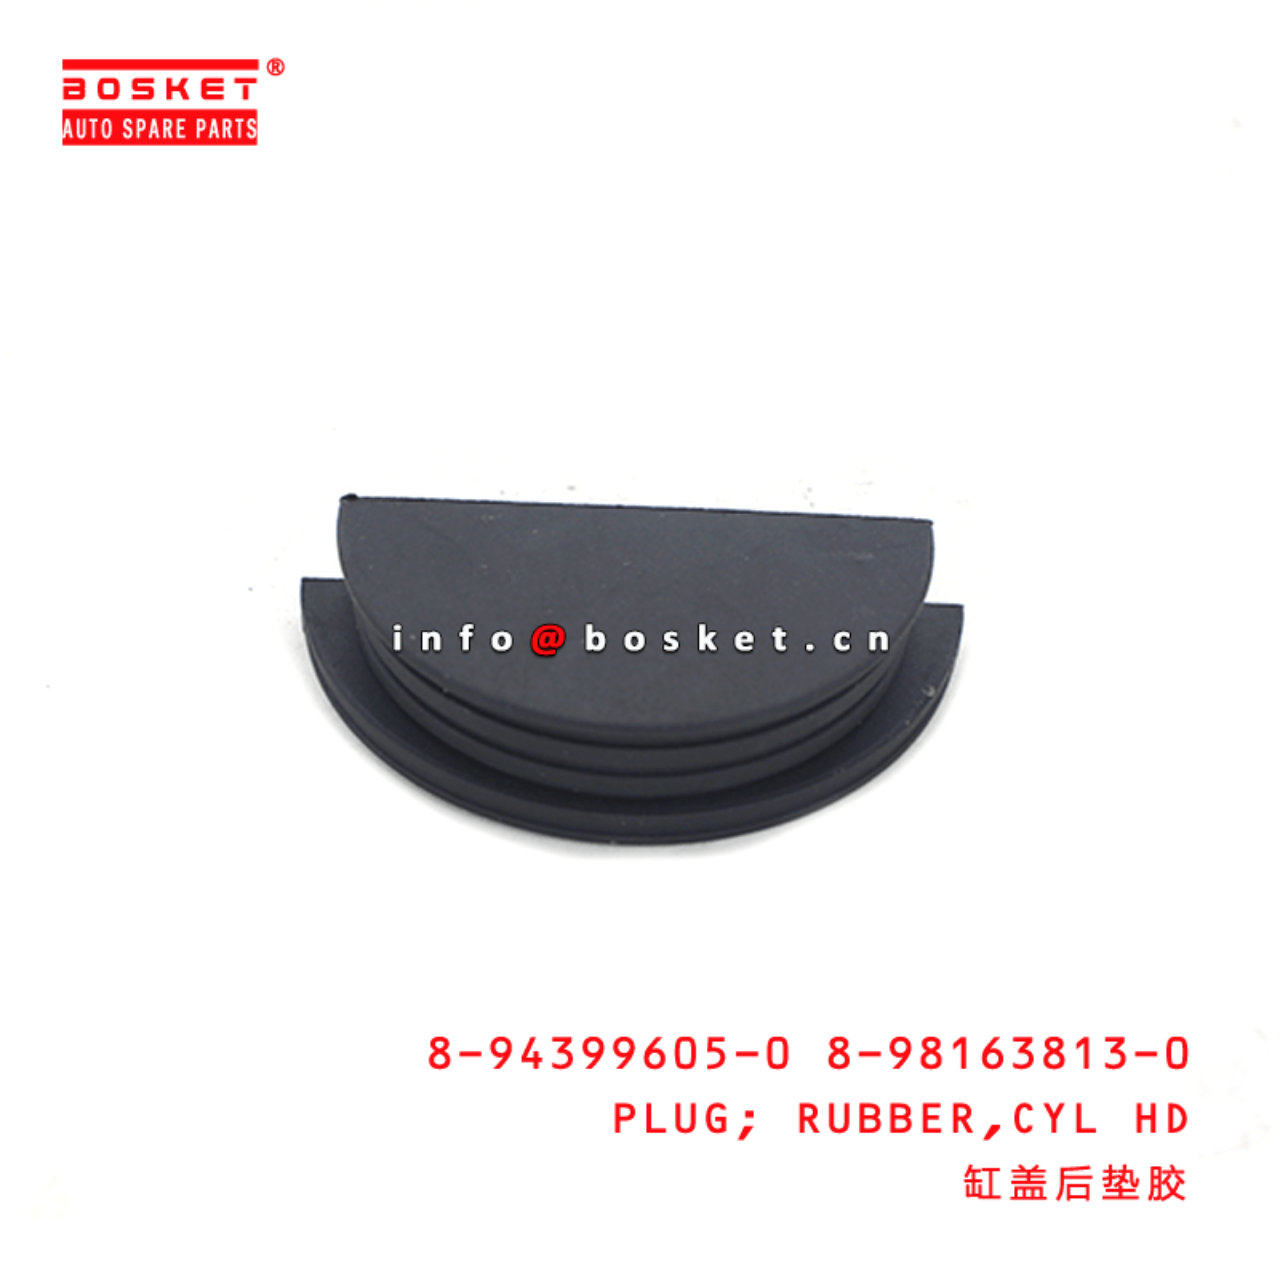 8-94399605-0 8-98163813-0 Cylinder Head Rubber Plug 8943996050 8981638130 Suitable for ISUZU ELF 4HK